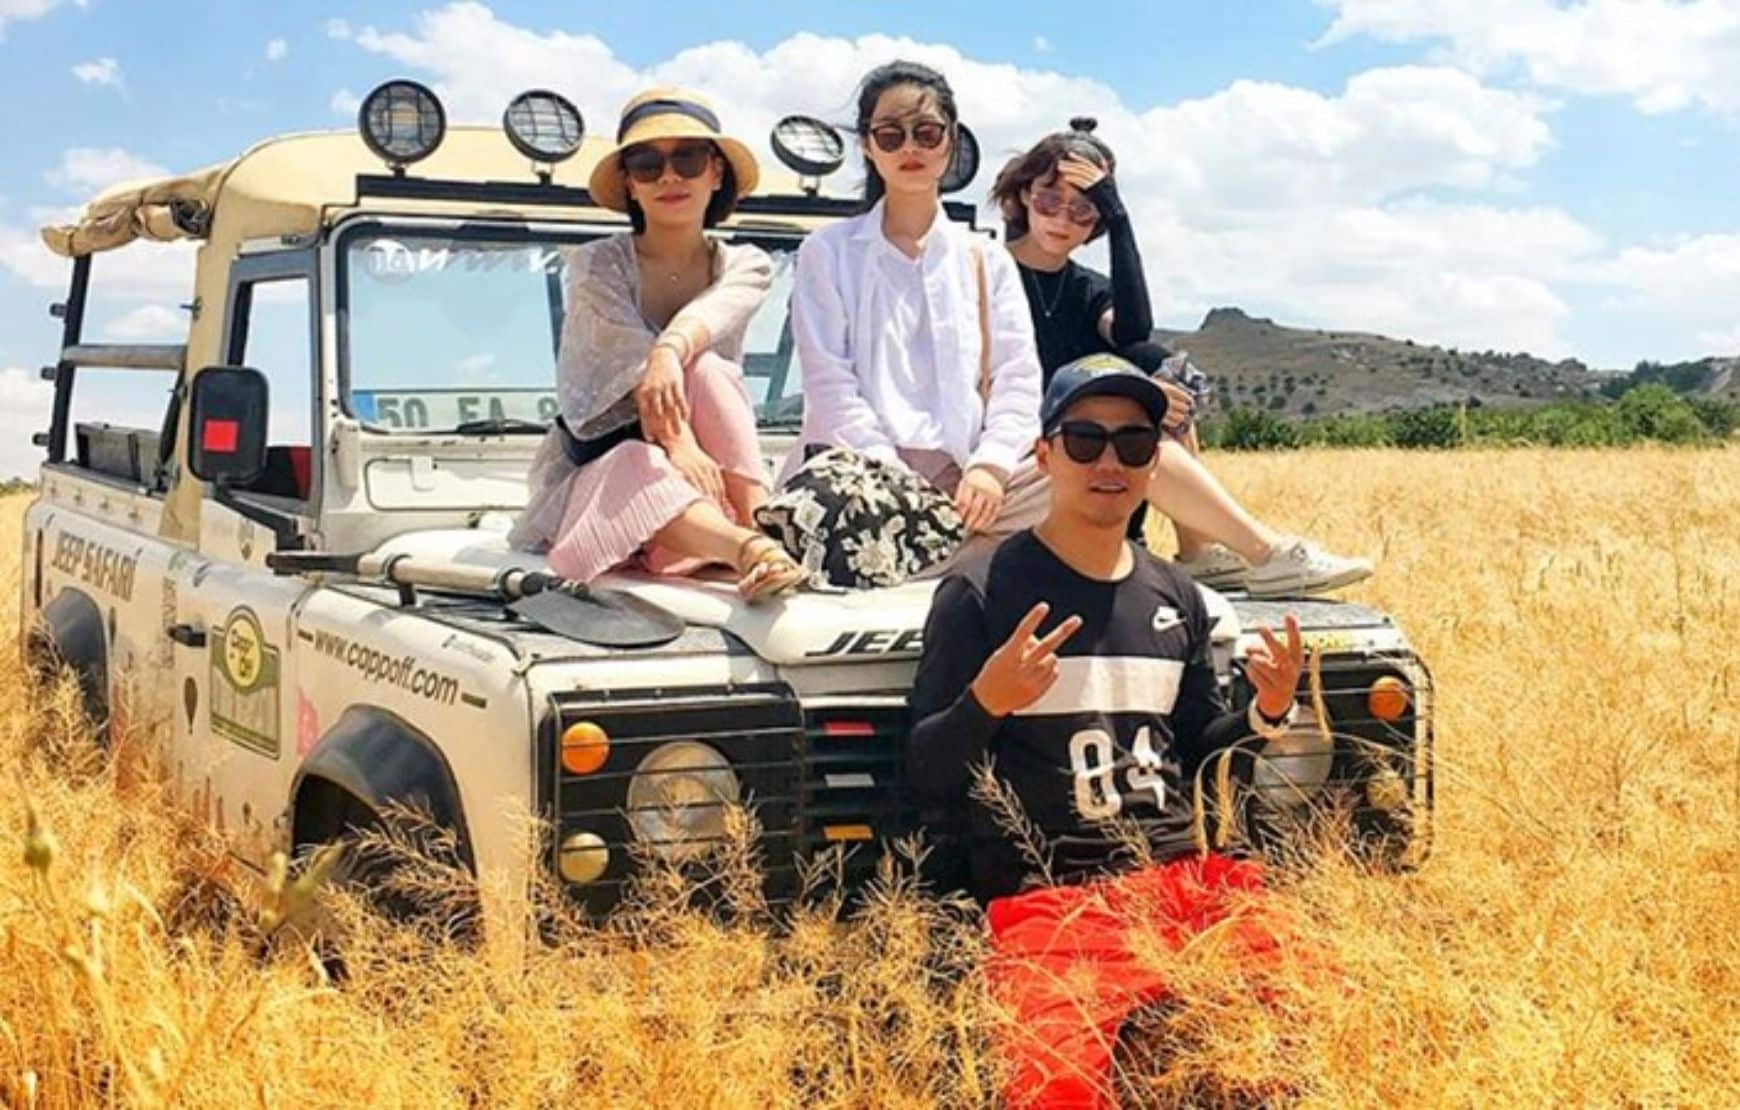 Jeep Safari in Cappadocia - a small group doing safari